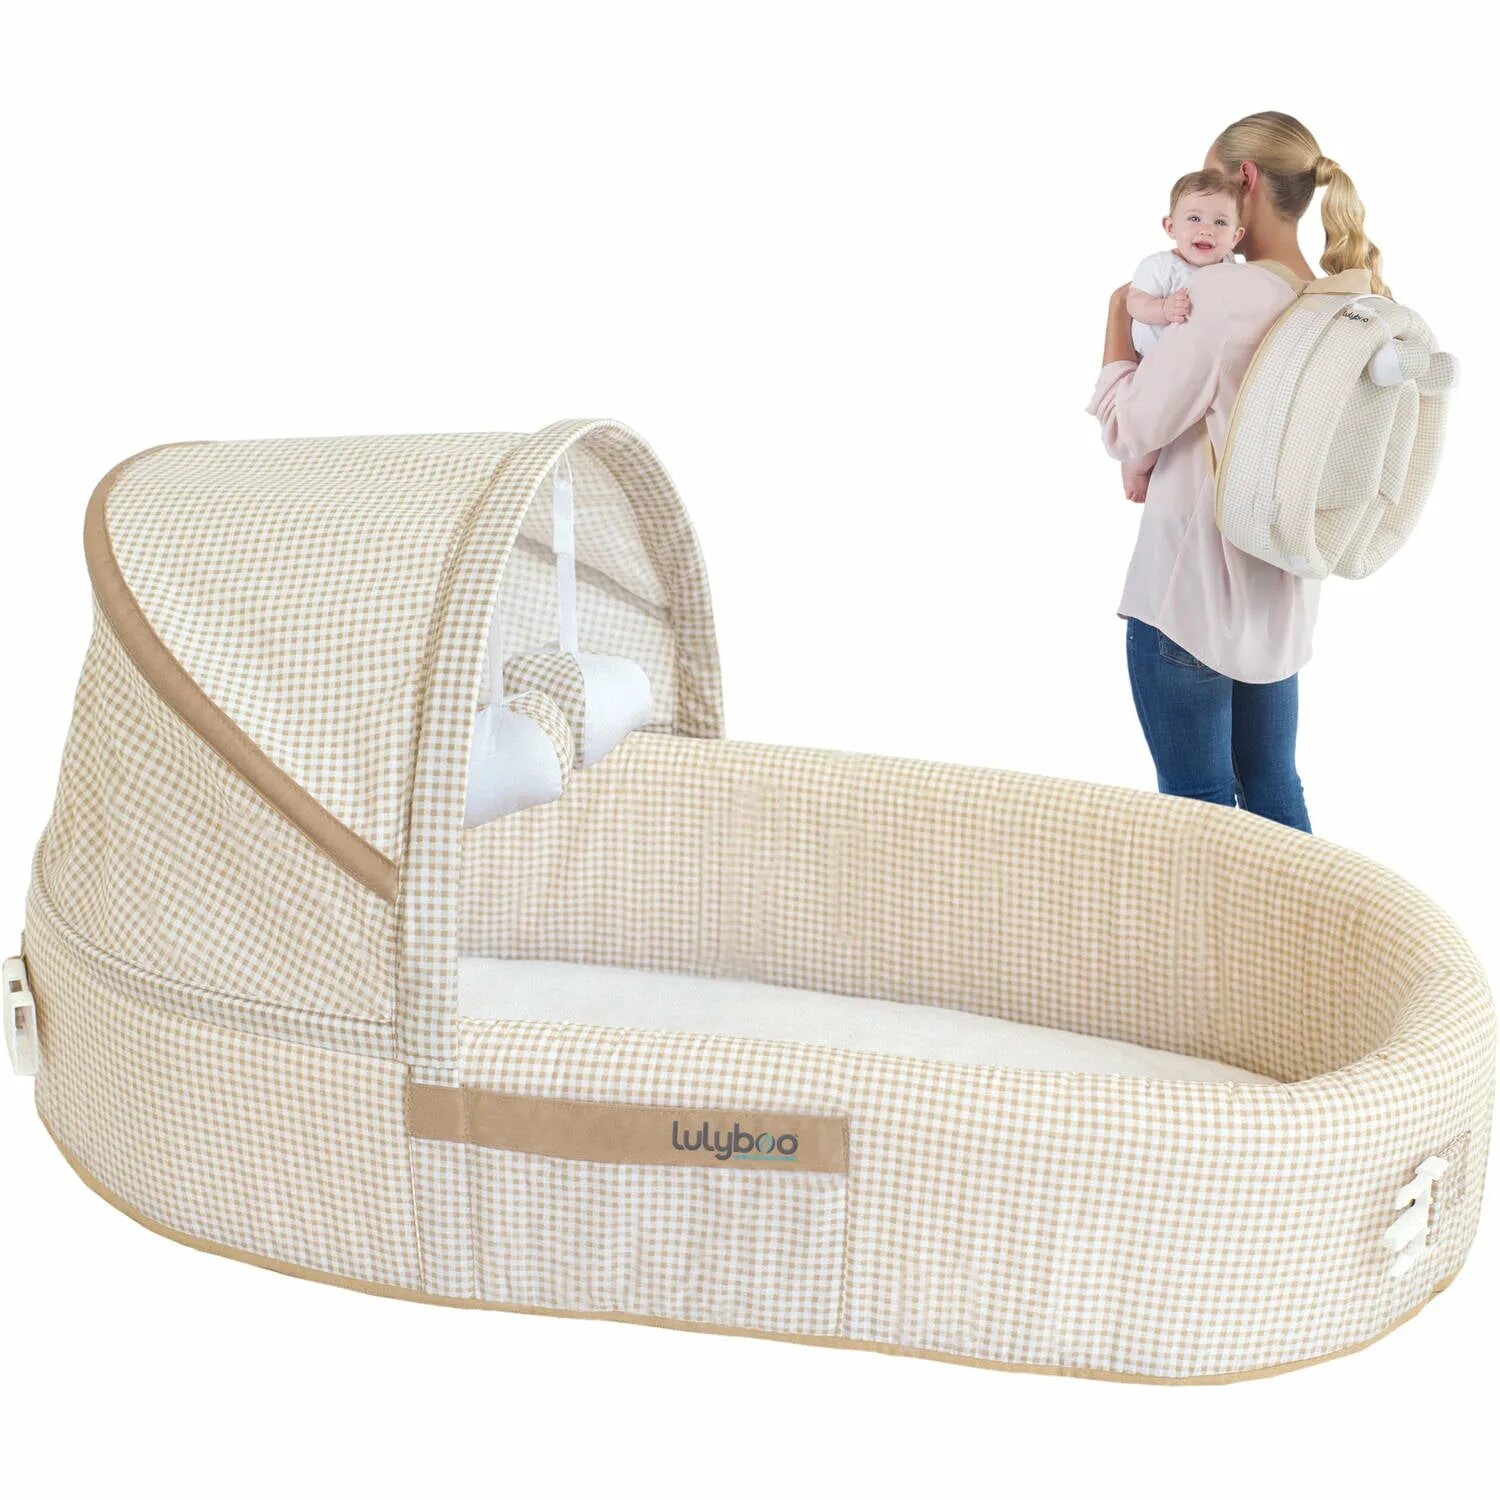 Колыбелька для сна. Snuggle Nest кроватка. Колыбель люлька mobile Crib uboo Baby tlc01-1. Переноска люлька Panda для новорожд. Ребенок в люльке.